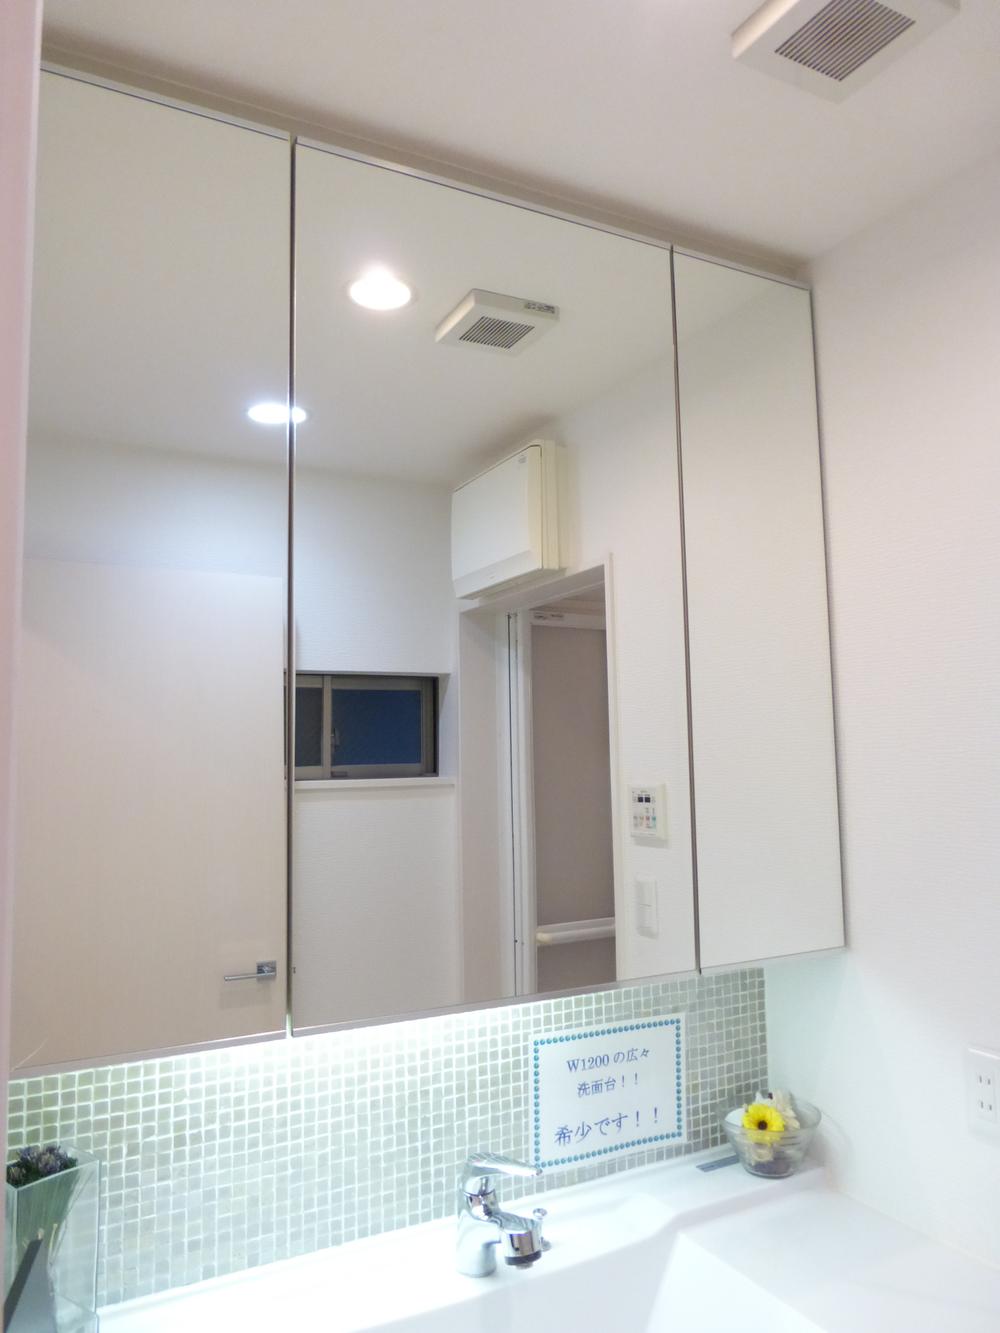 Wash basin, toilet. Indoor (December 15, 2013) Shooting Boast of a large mirror! 